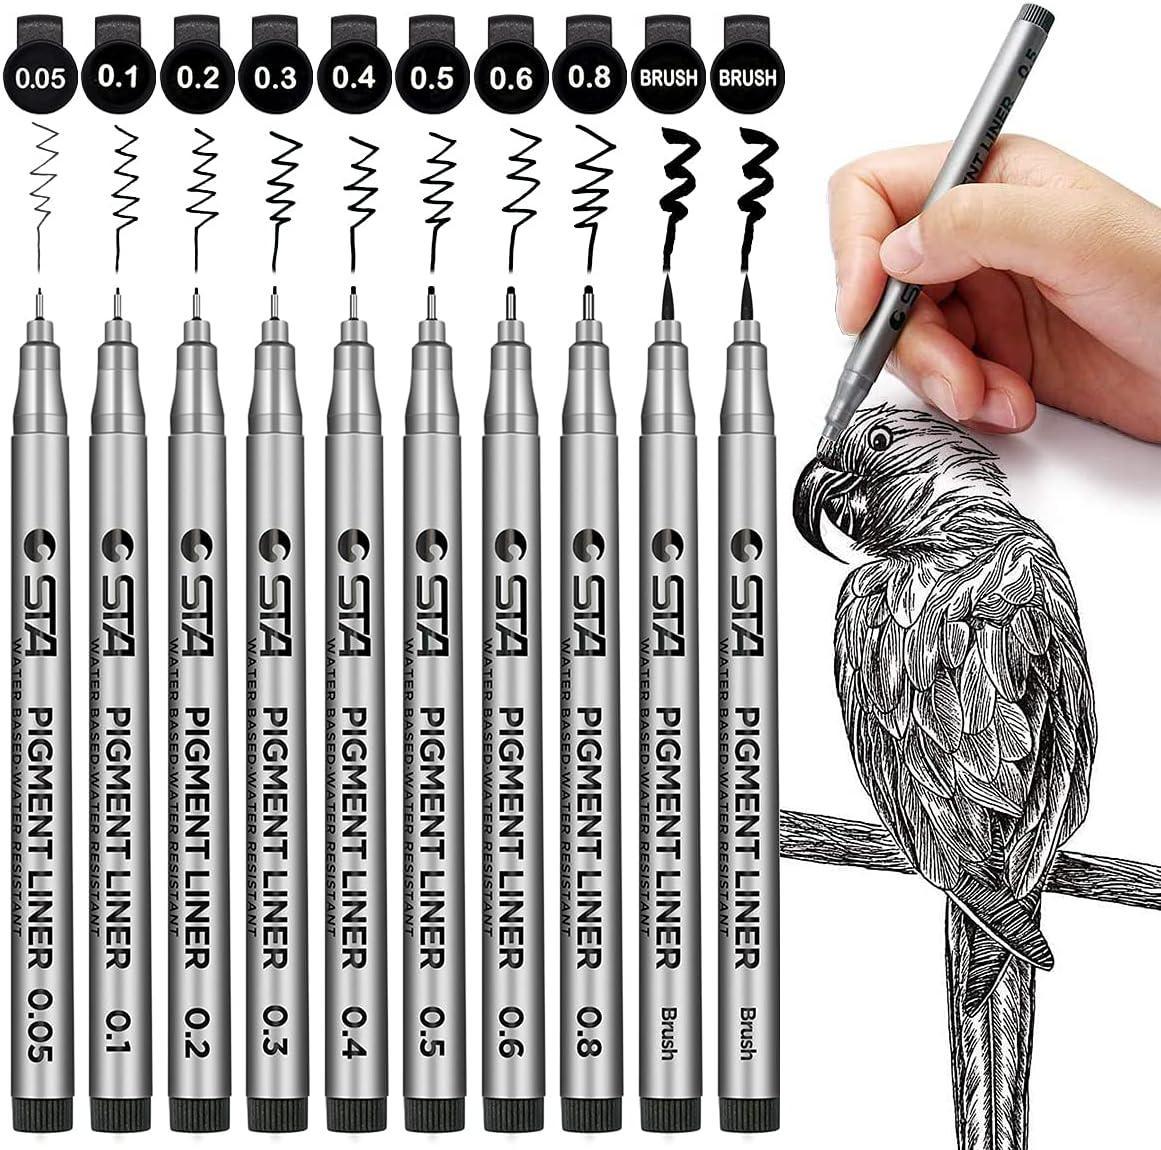  BUUTIIGER Micro-Line Pens 12 Black - Precision